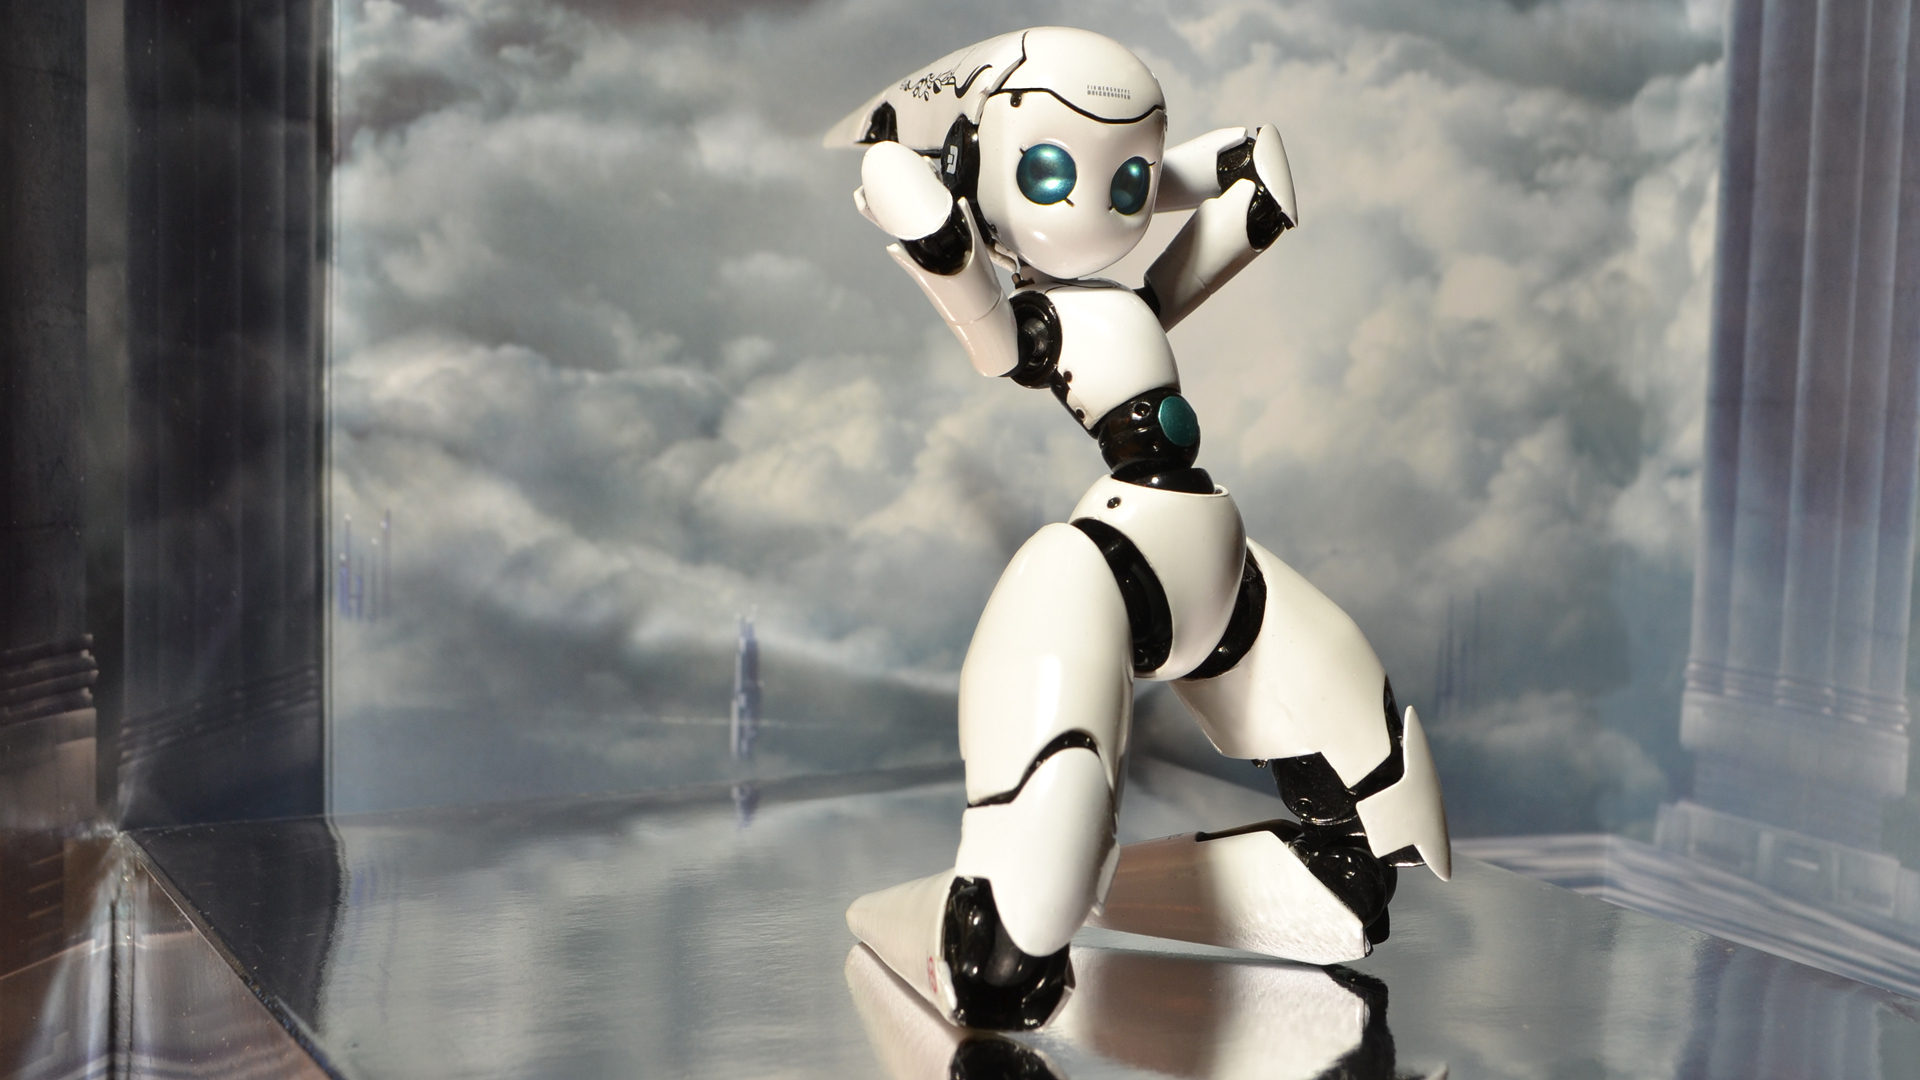 Robot Pose Wallpaper Girl Face Clouds Height